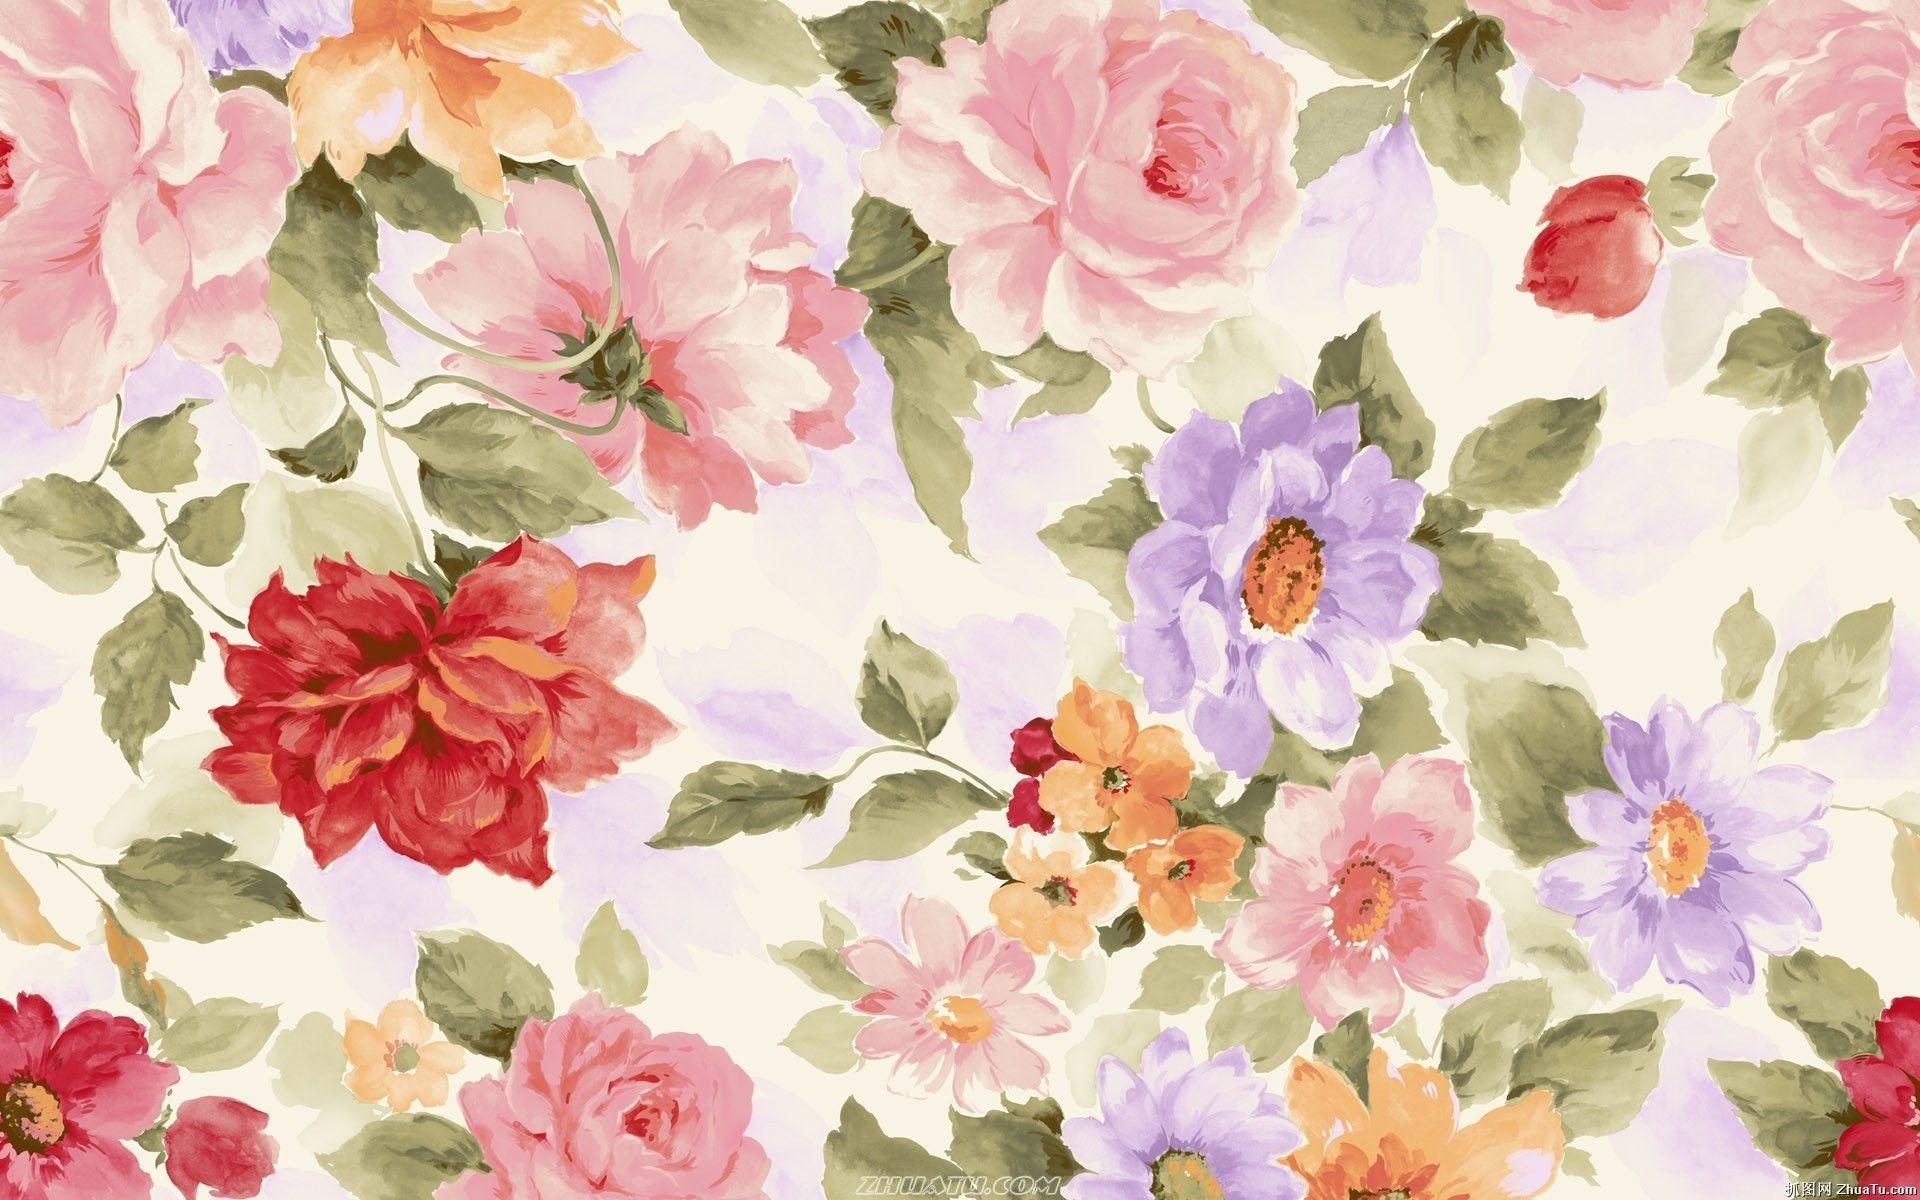 Watercolor Floral Wallpaper Images  Free Download on Freepik